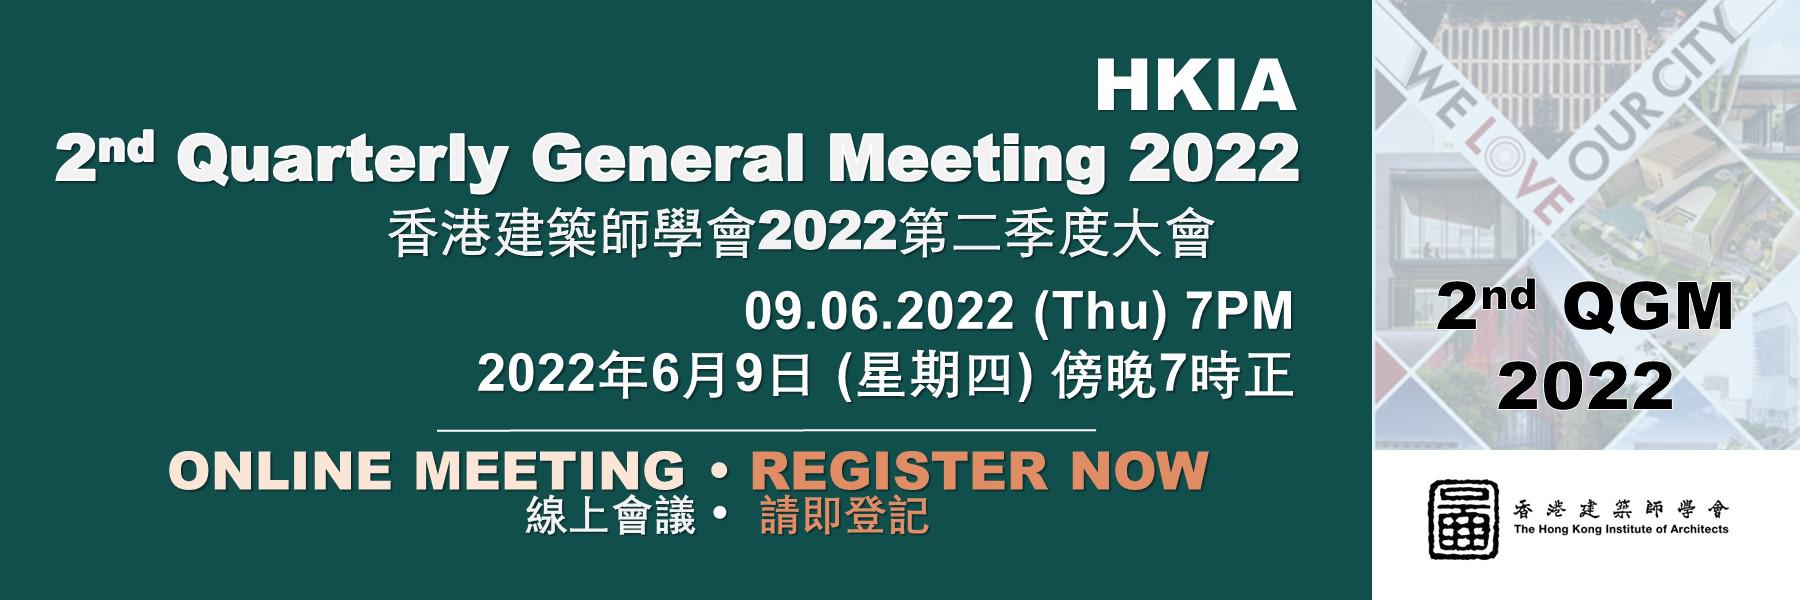 HKIA Second Quarterly General Meeting (2nd QGM) 2022